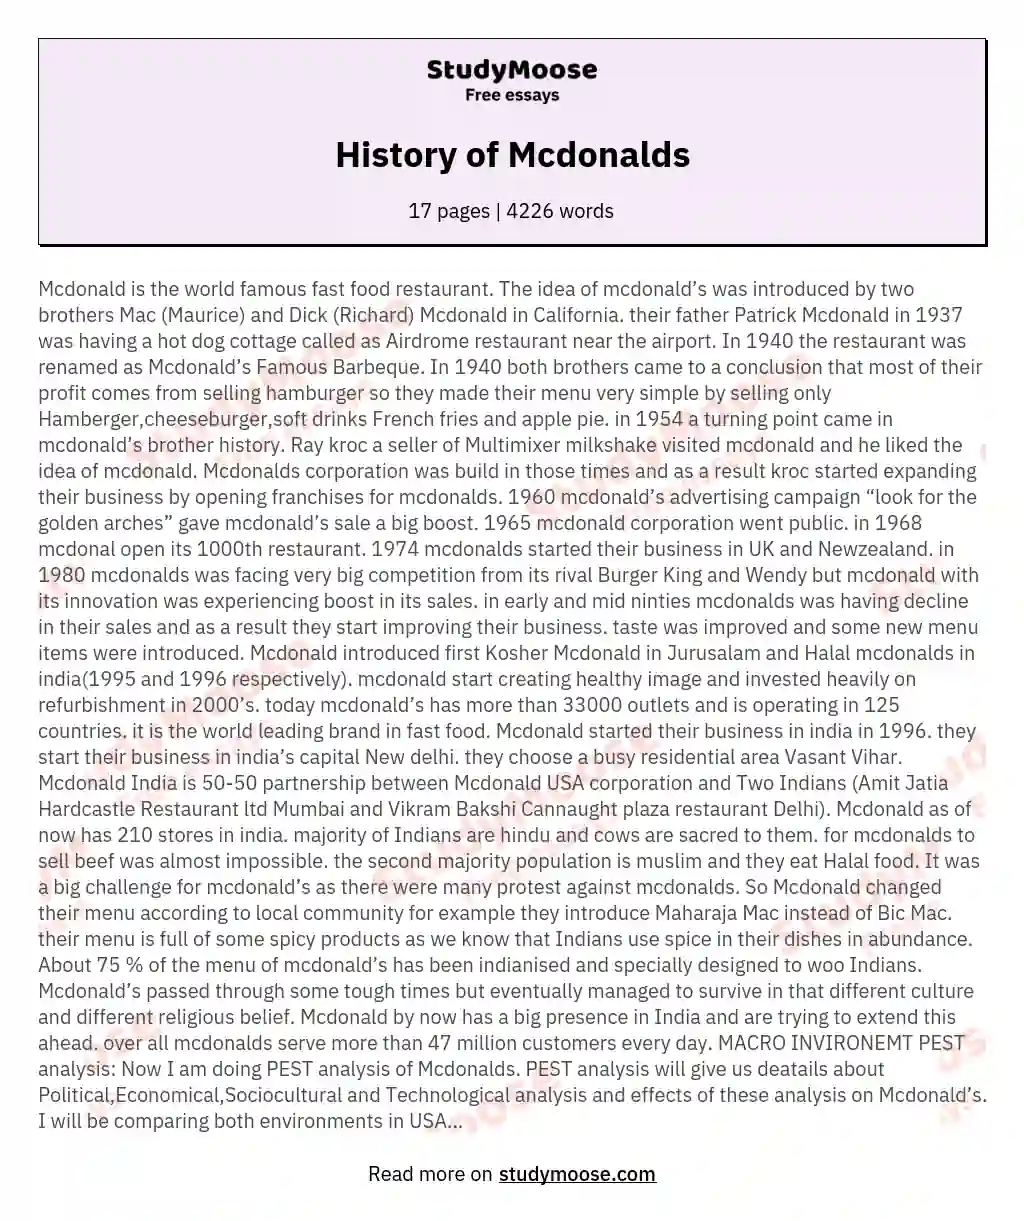 History of Mcdonalds essay